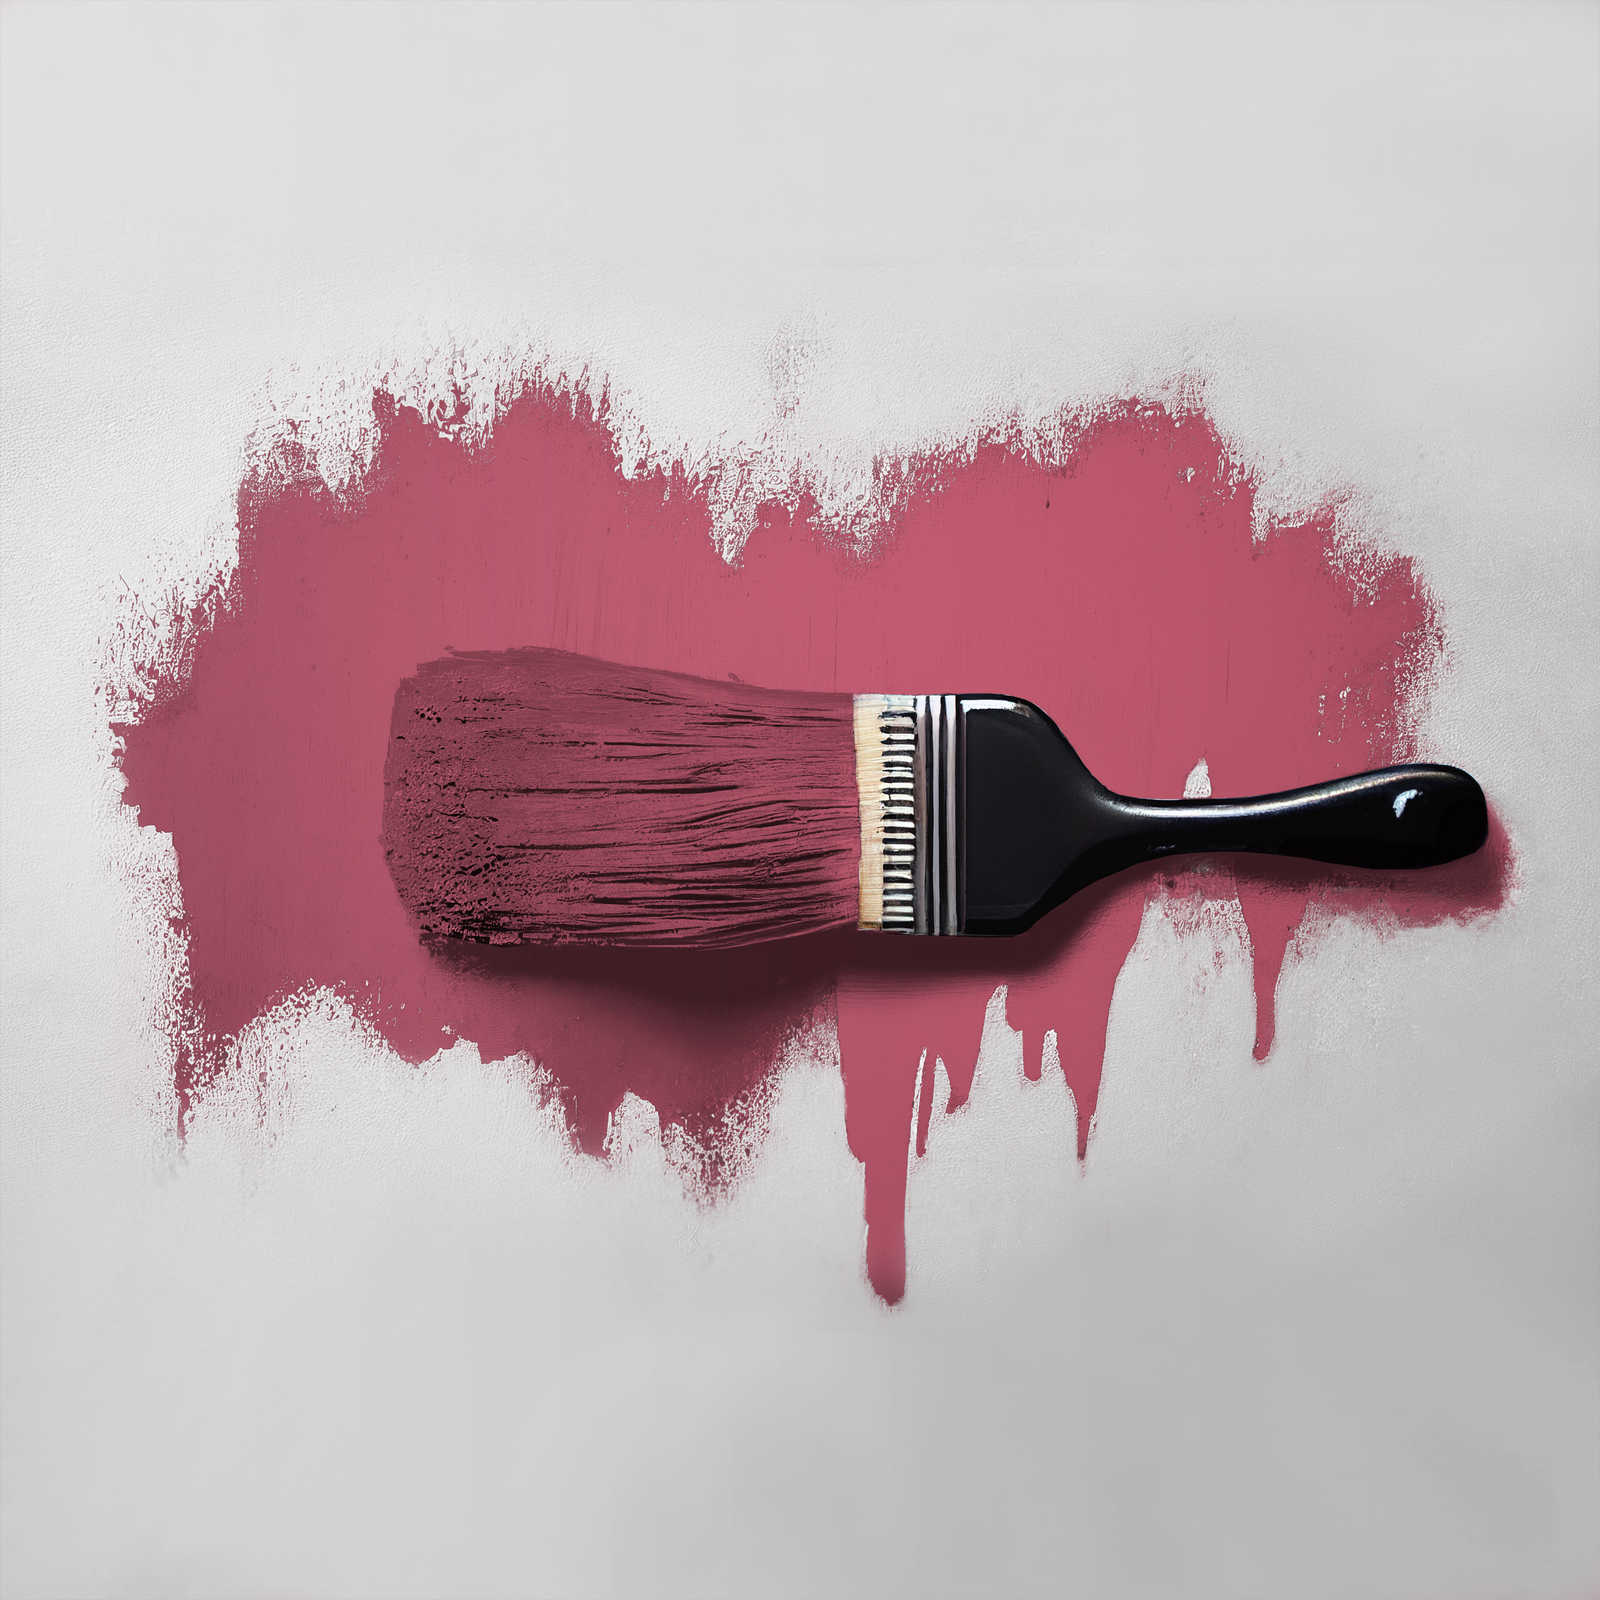             Peinture murale TCK7011 »Rosy Raspberry« en rose foncé intense – 2,5 litres
        